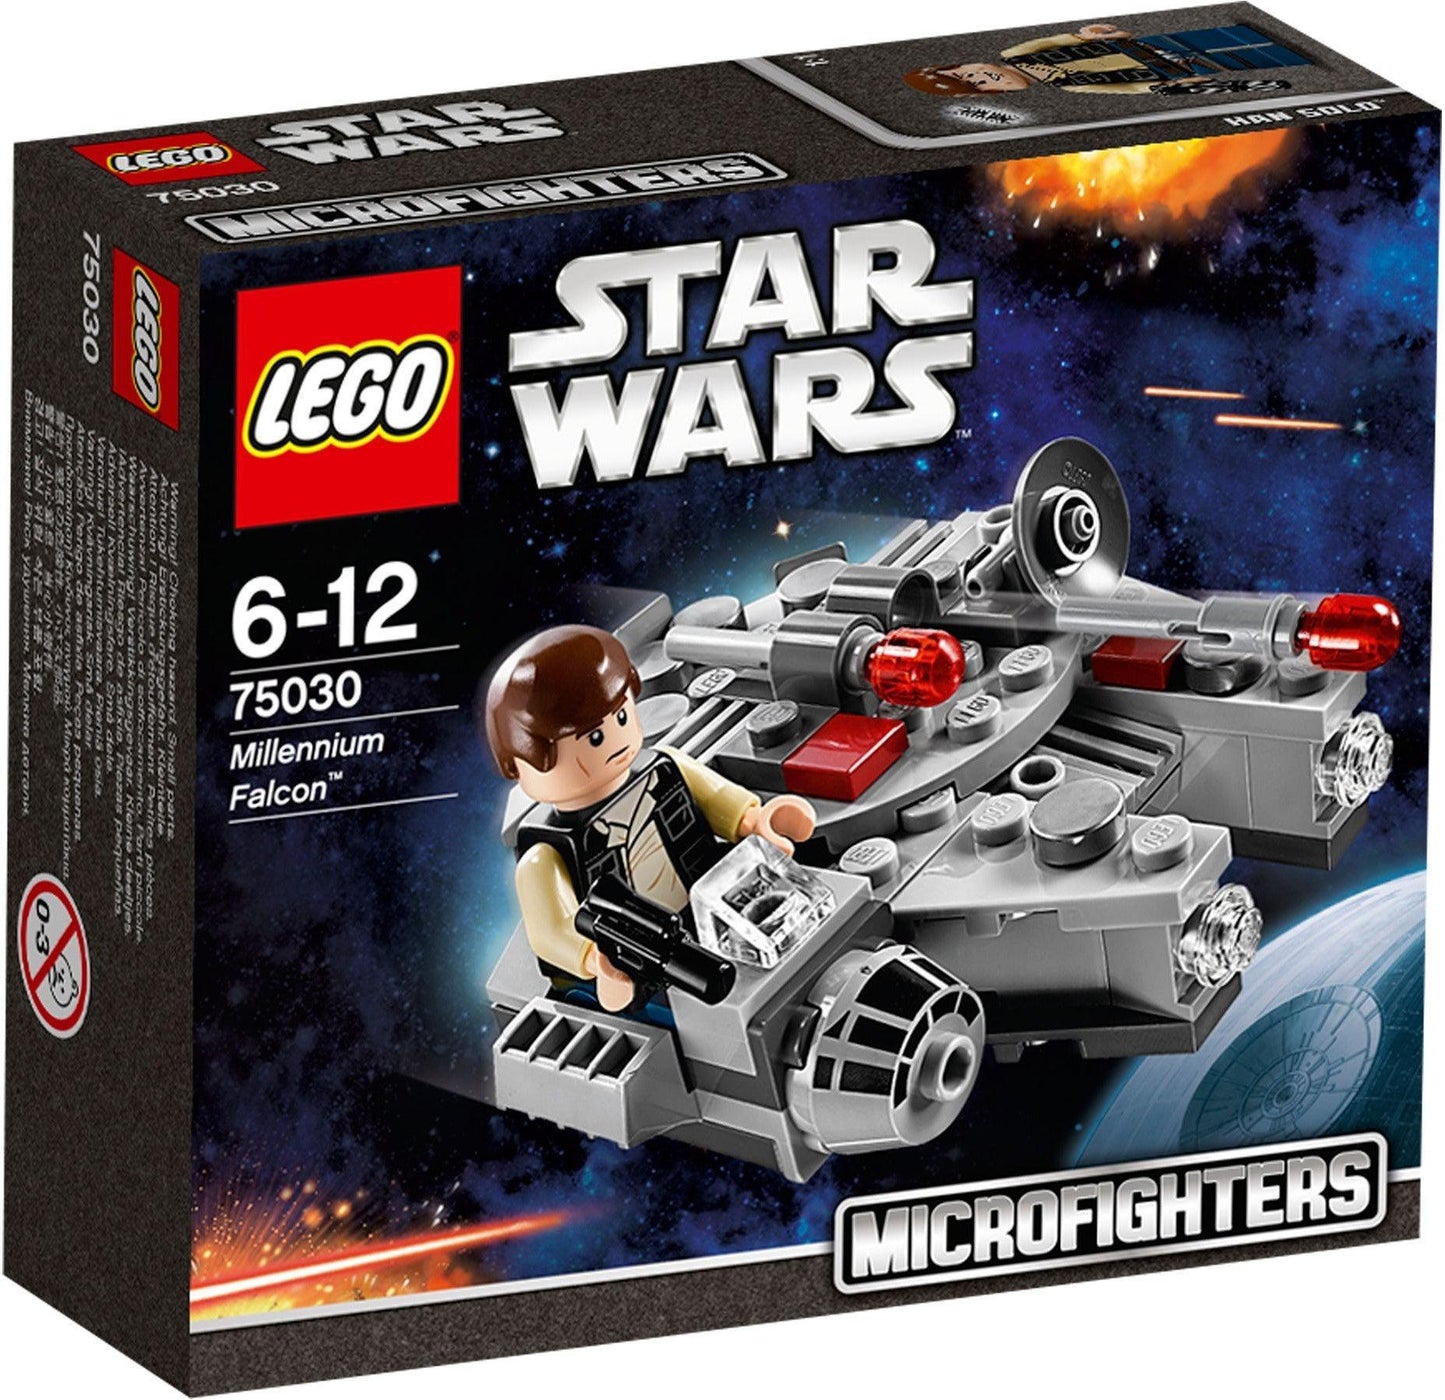 LEGO Millennium Falcon Microfighter 75030 Star Wars - Microfighters LEGO Star Wars - Microfighters @ 2TTOYS LEGO €. 9.99